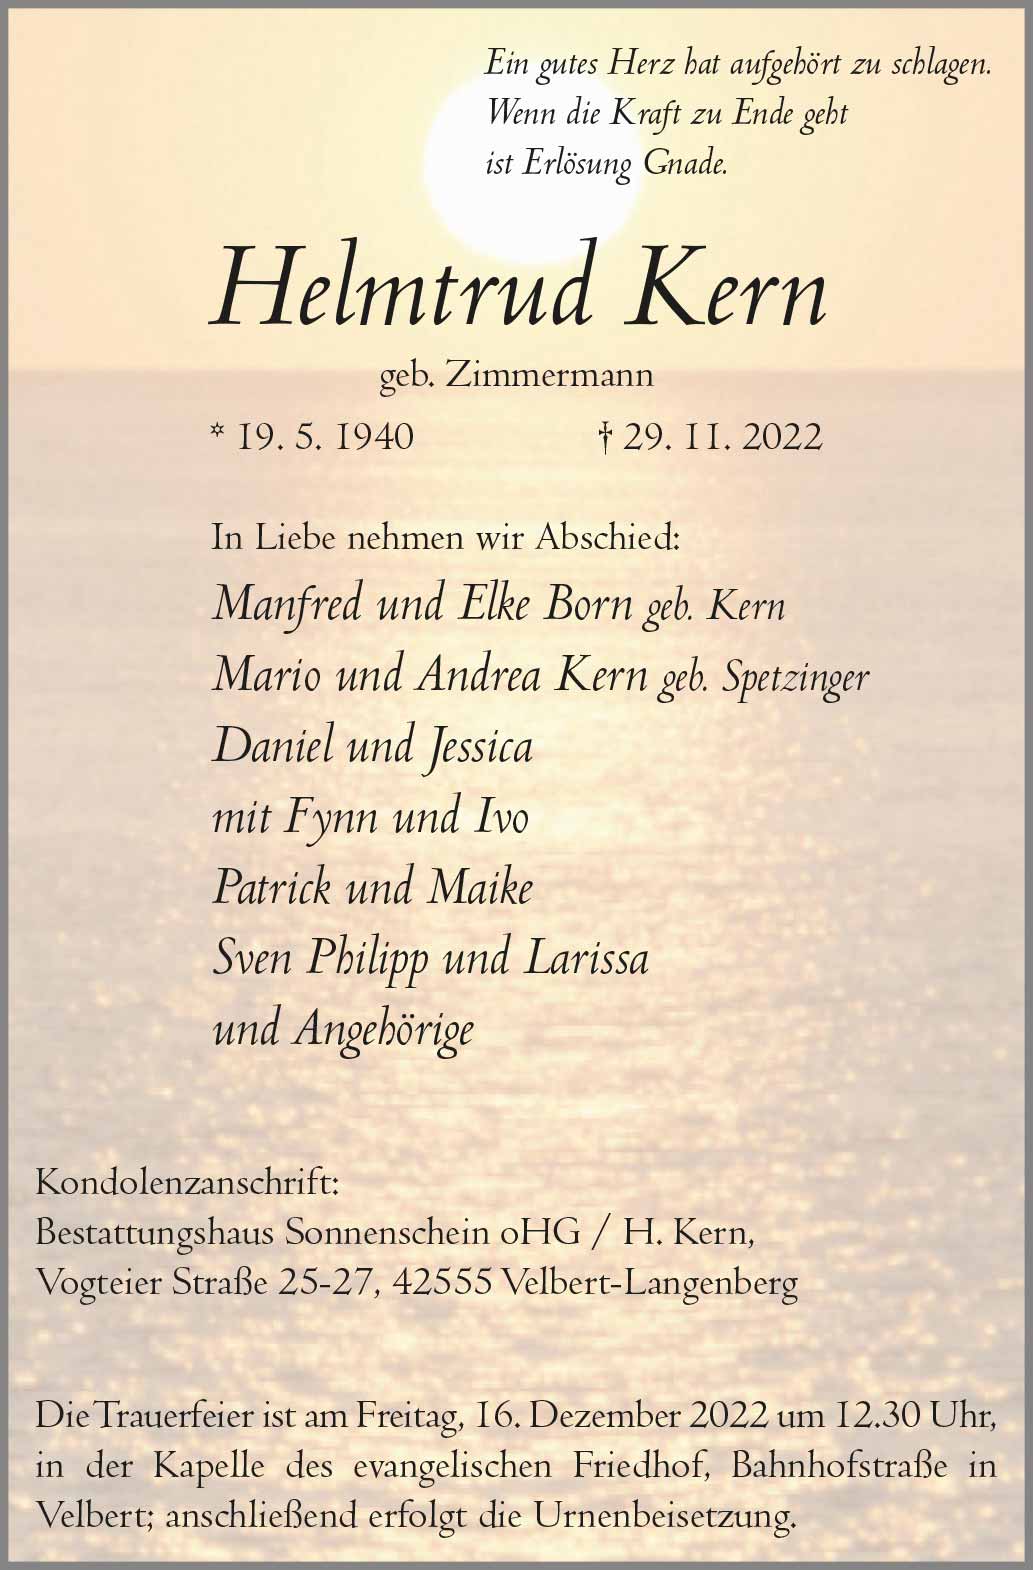 Helmtrud Kern † 29. 11. 2022